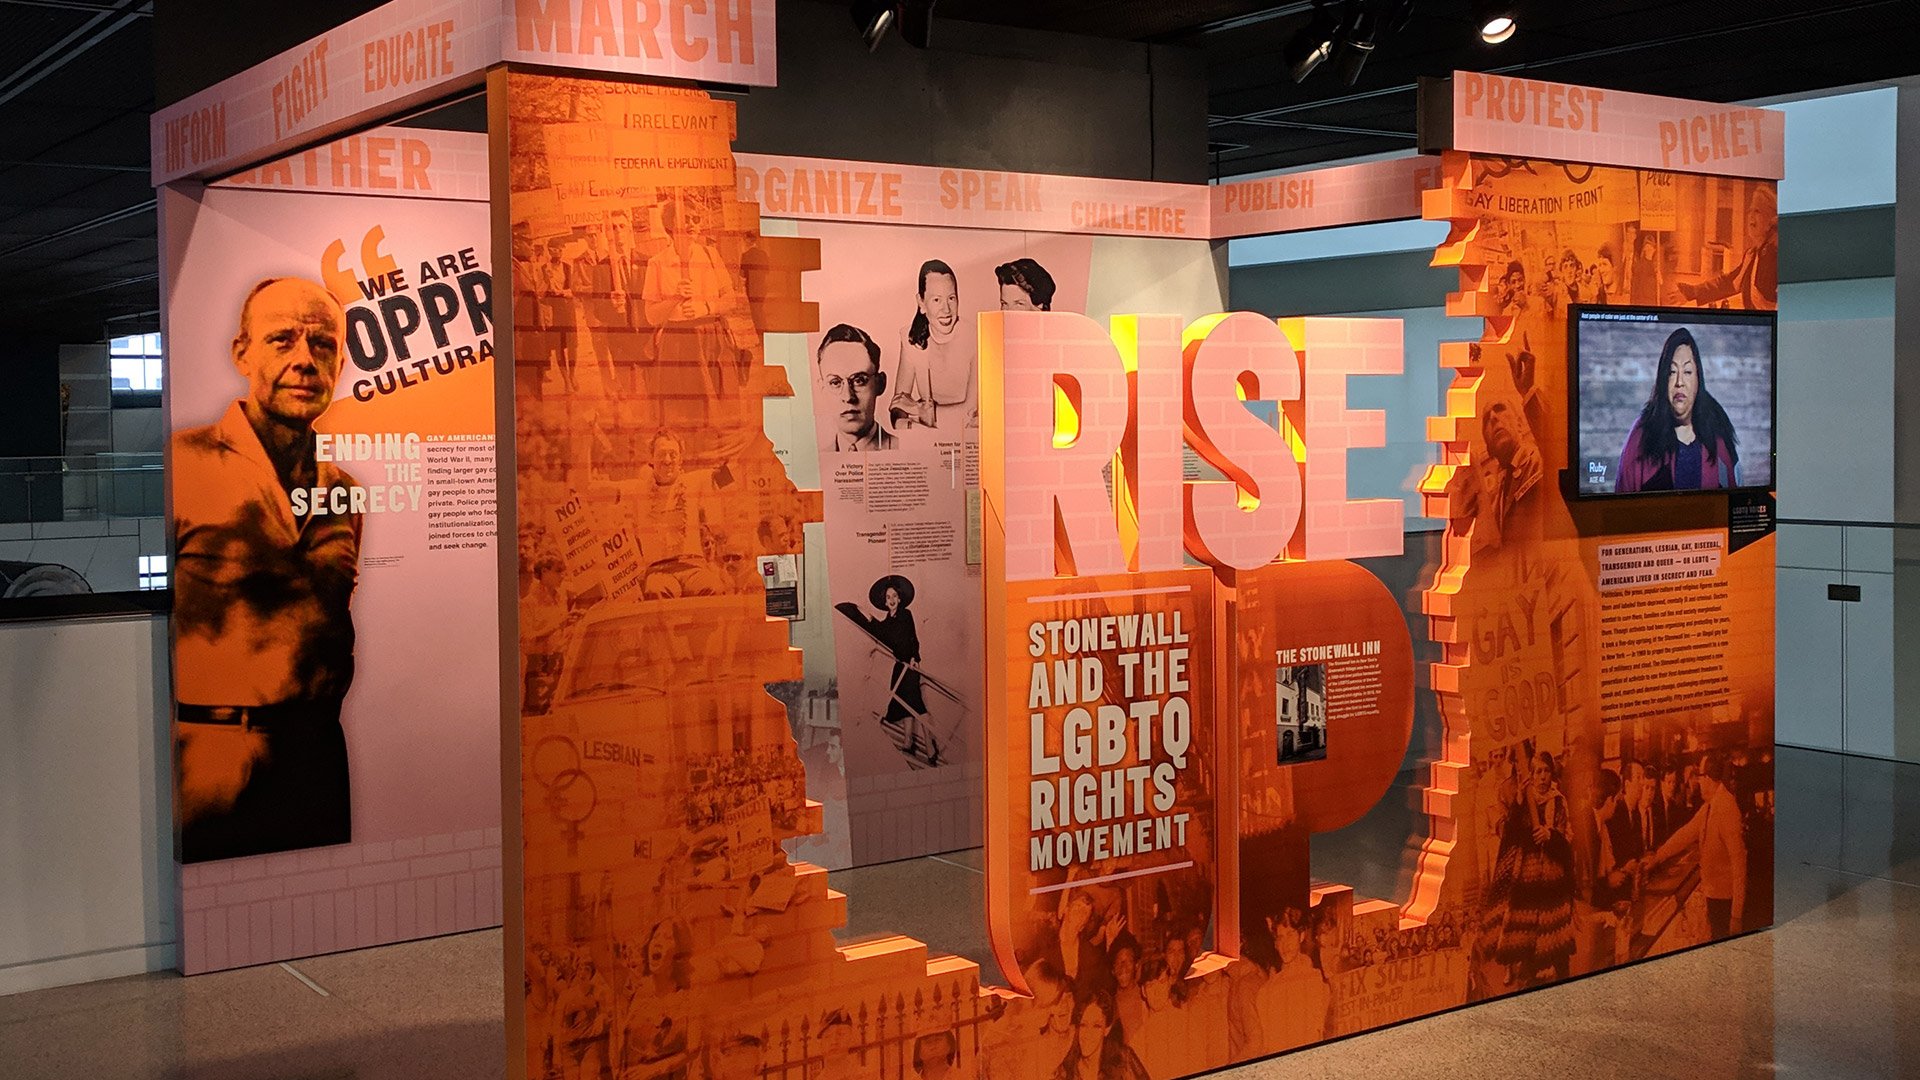 Rise Up Exhibit for LGBTQ activism